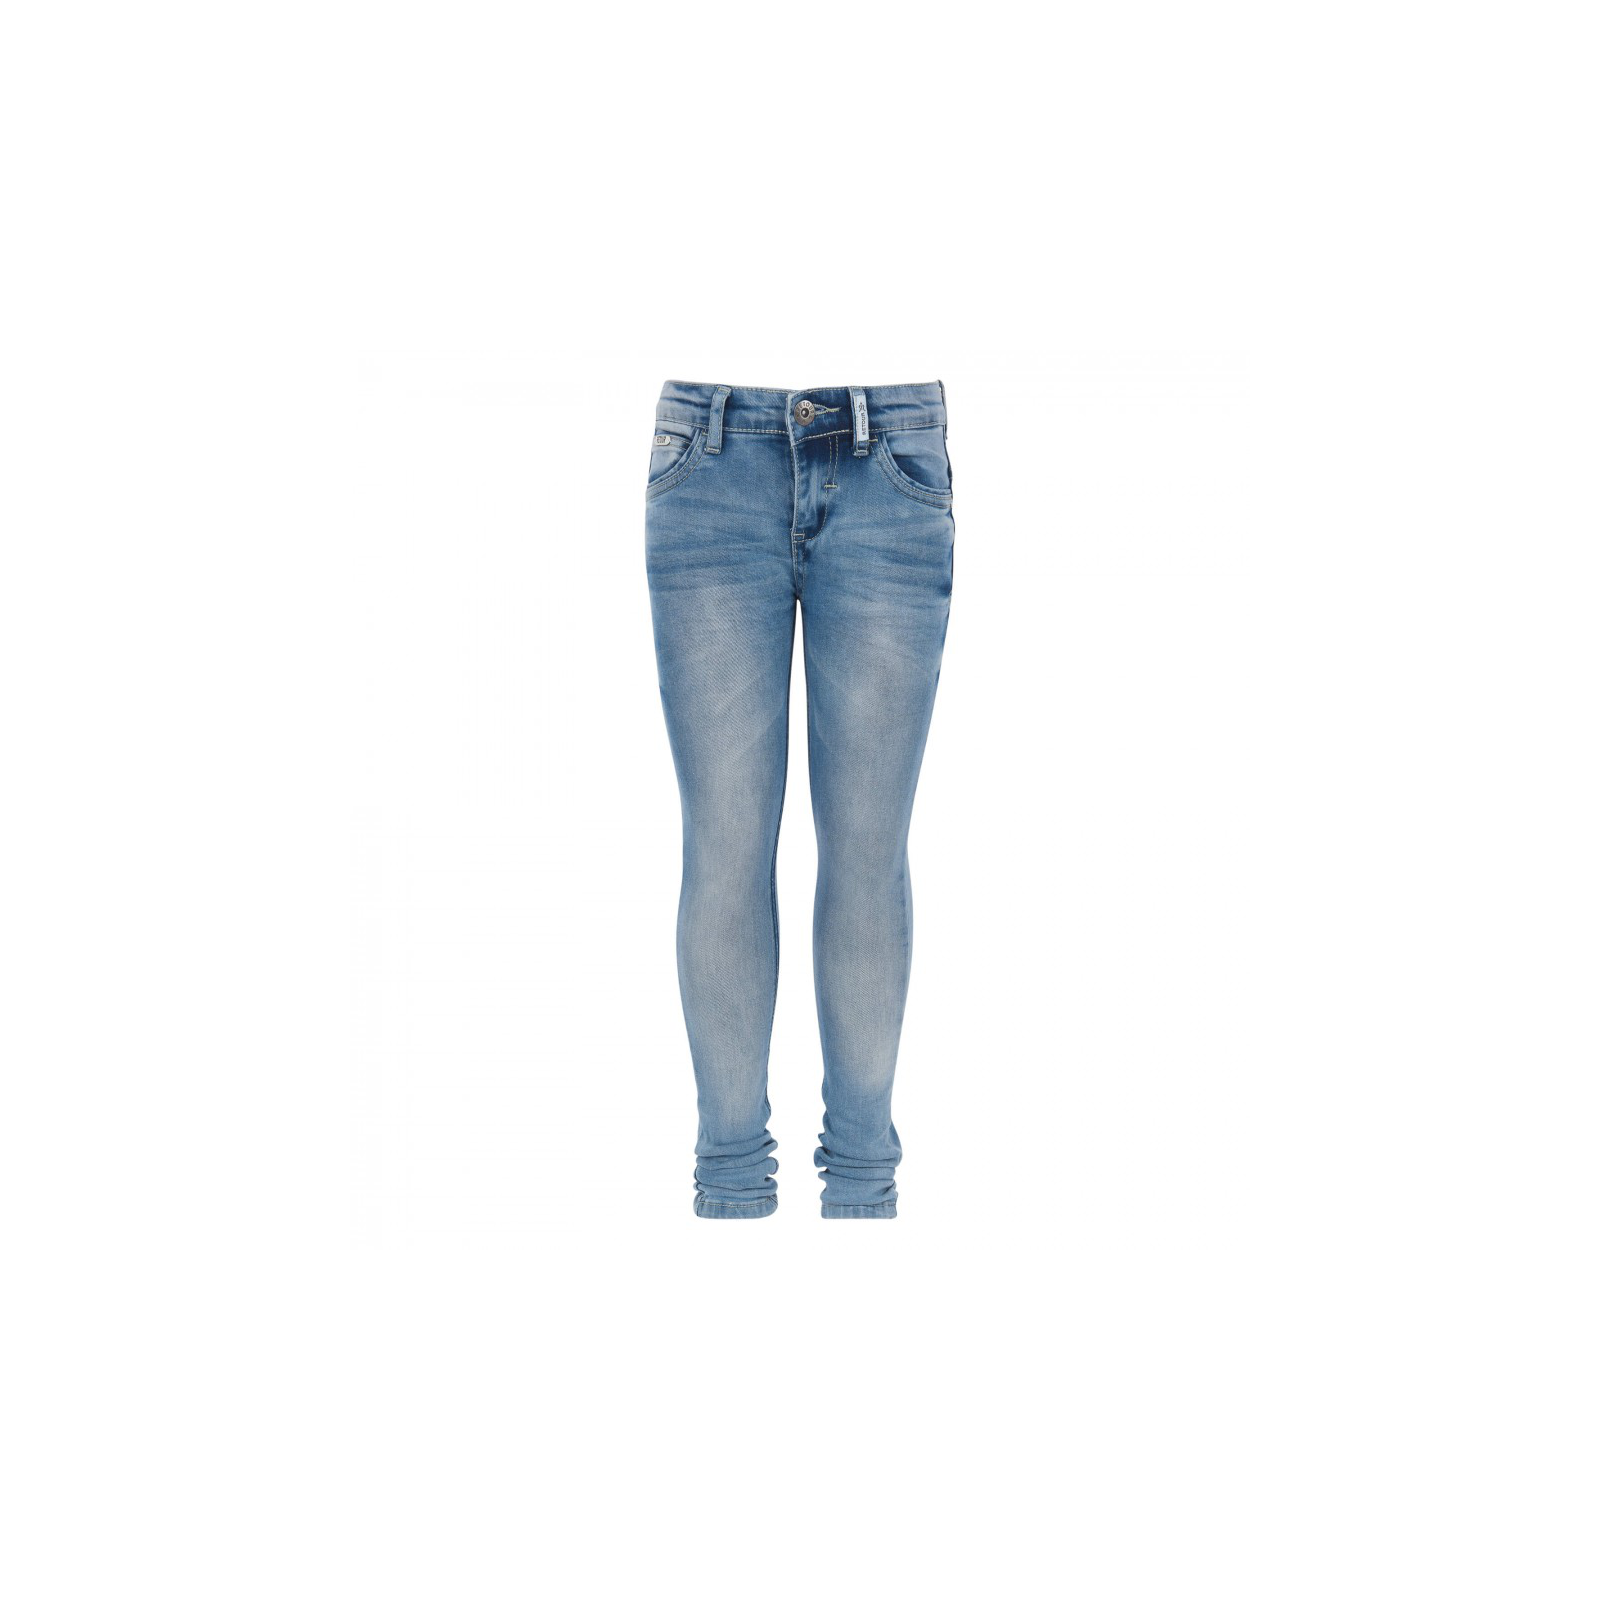 pasta bedenken gevoeligheid Retour - Jeans - Victoria Bright Blue - Babbediboe